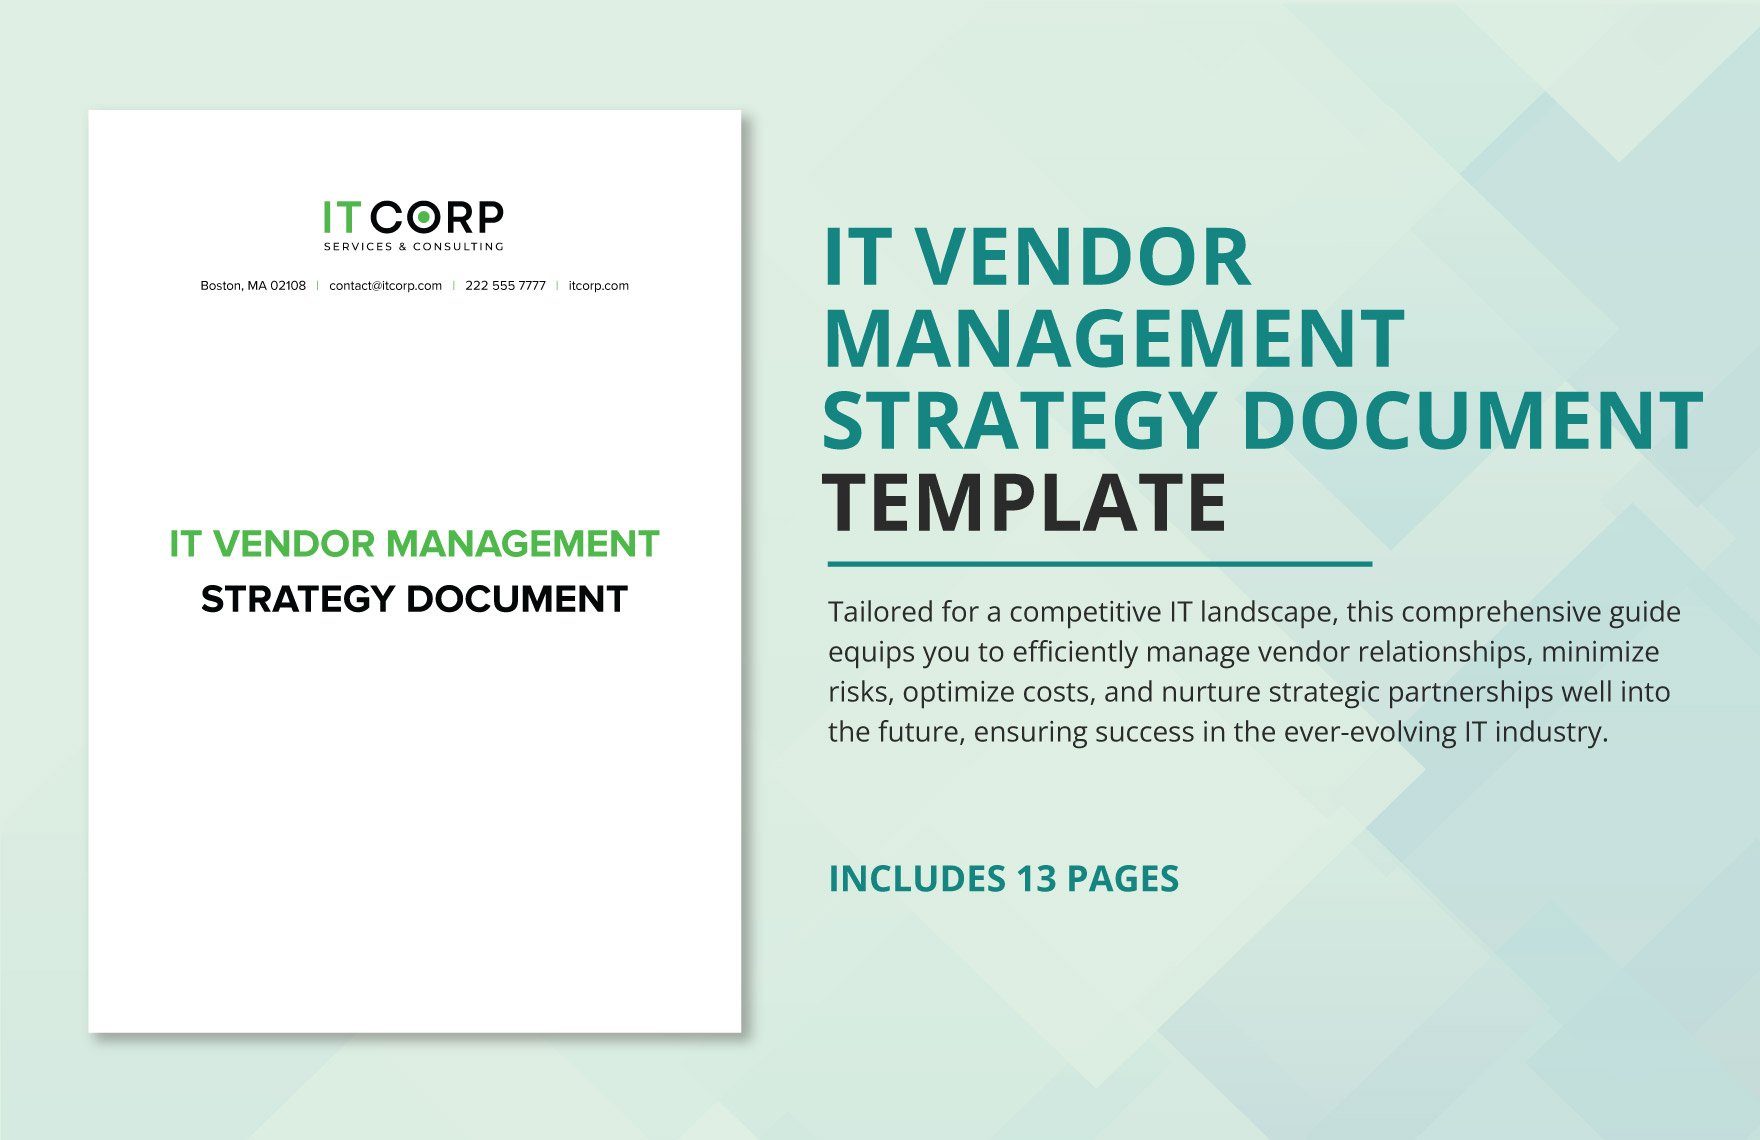 IT Vendor Management Strategy Document Template